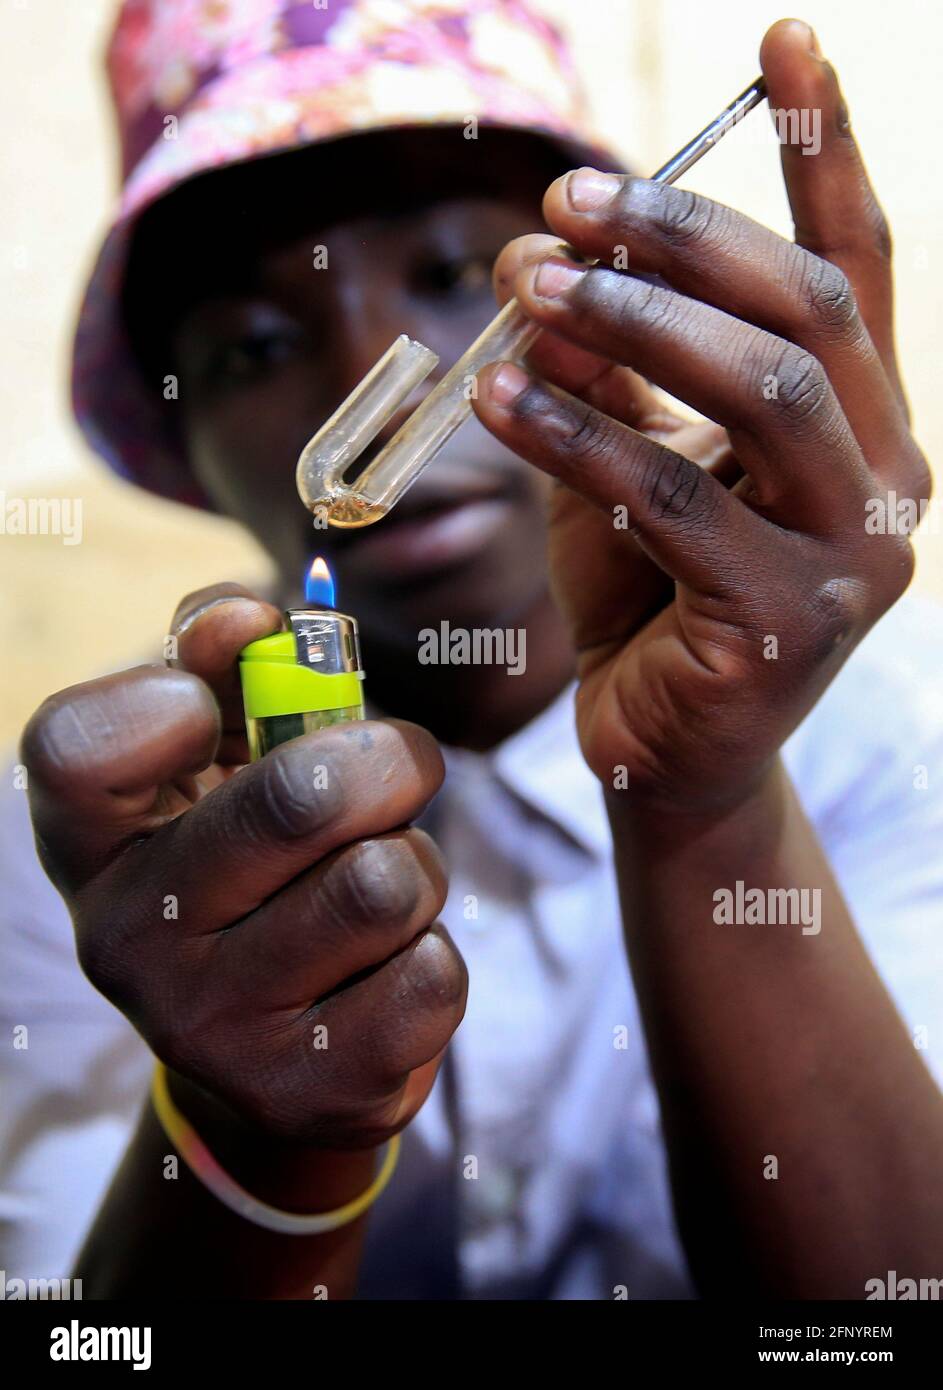 A Drug User Prepares A Crystal Methamphetamine Smoke In The High Density Suburb Of Mabvuku In